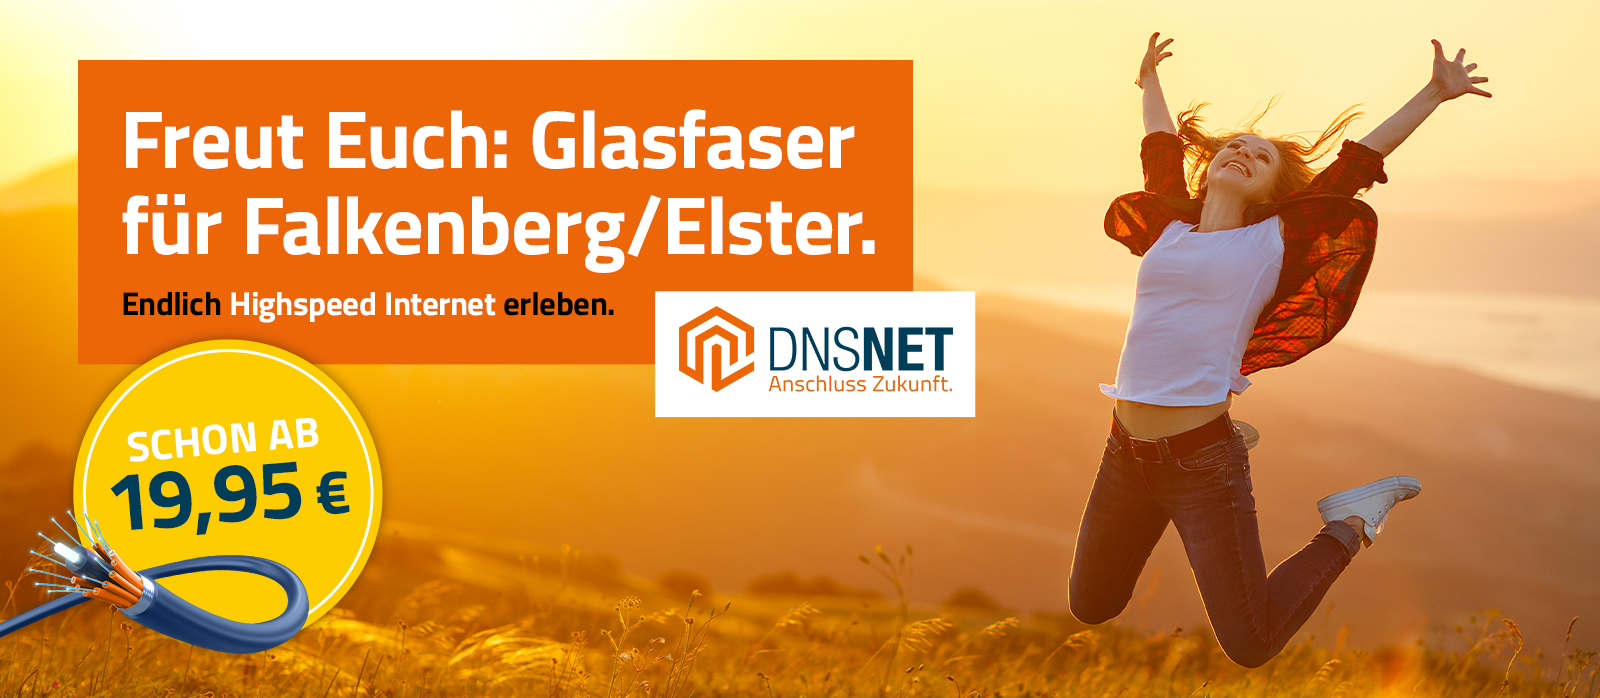 DNSNET-Web-Banner-Falkenberg2-1600x698